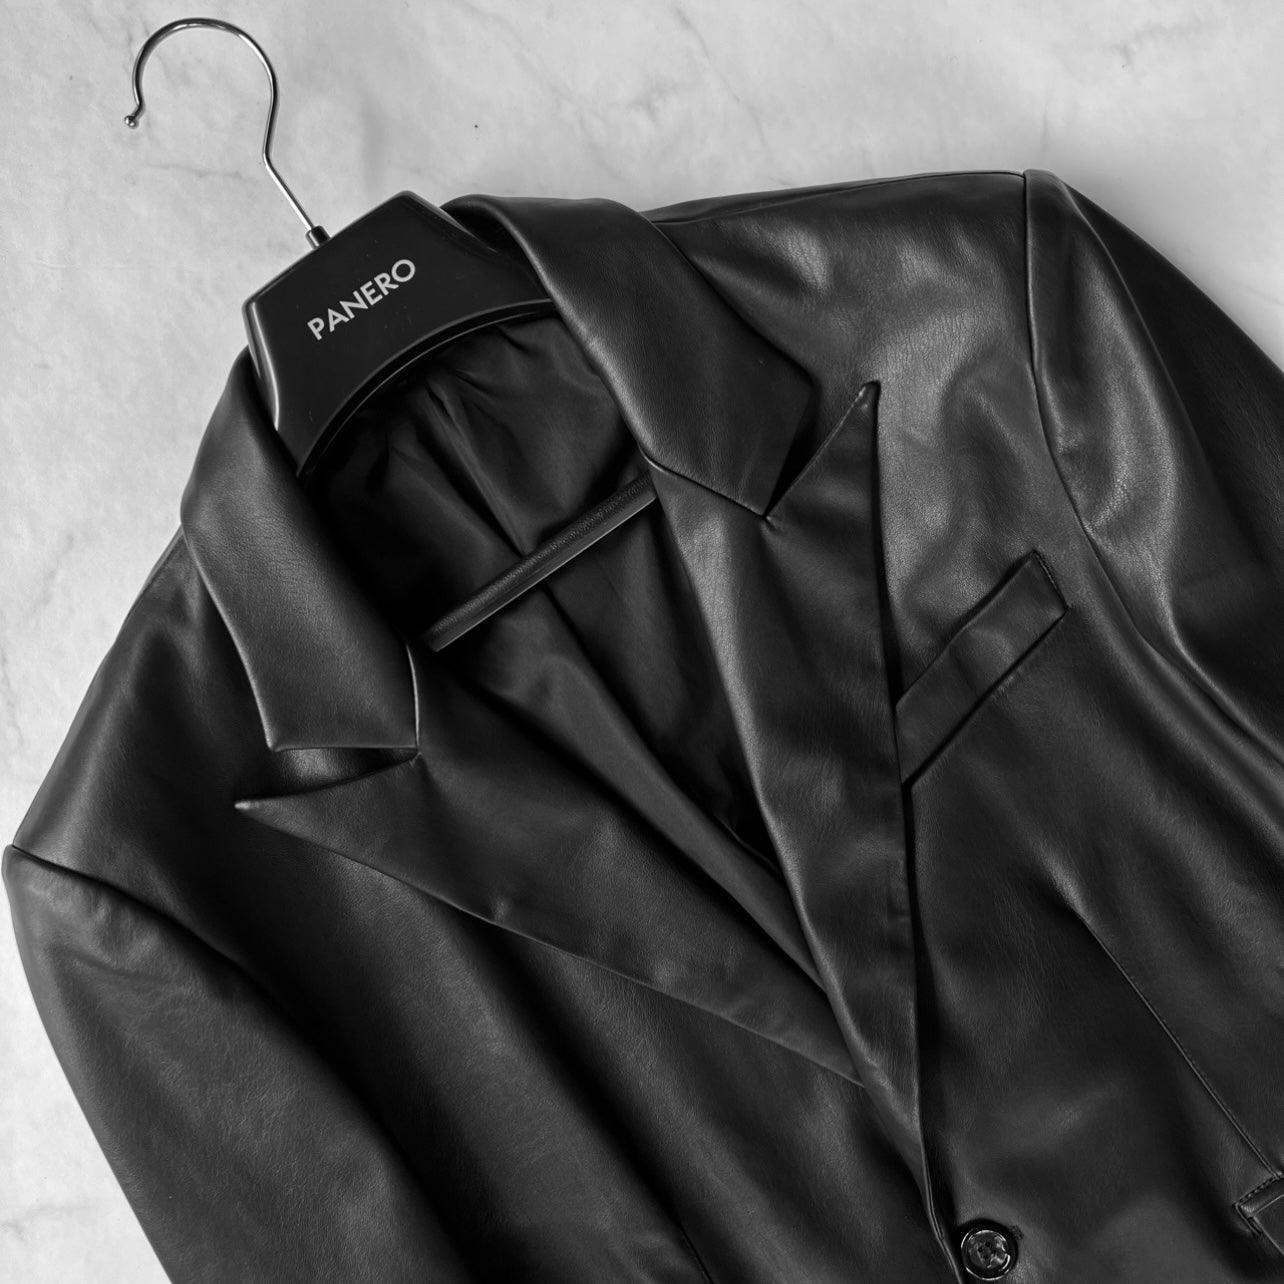 Leather Long Coat” – PANERO